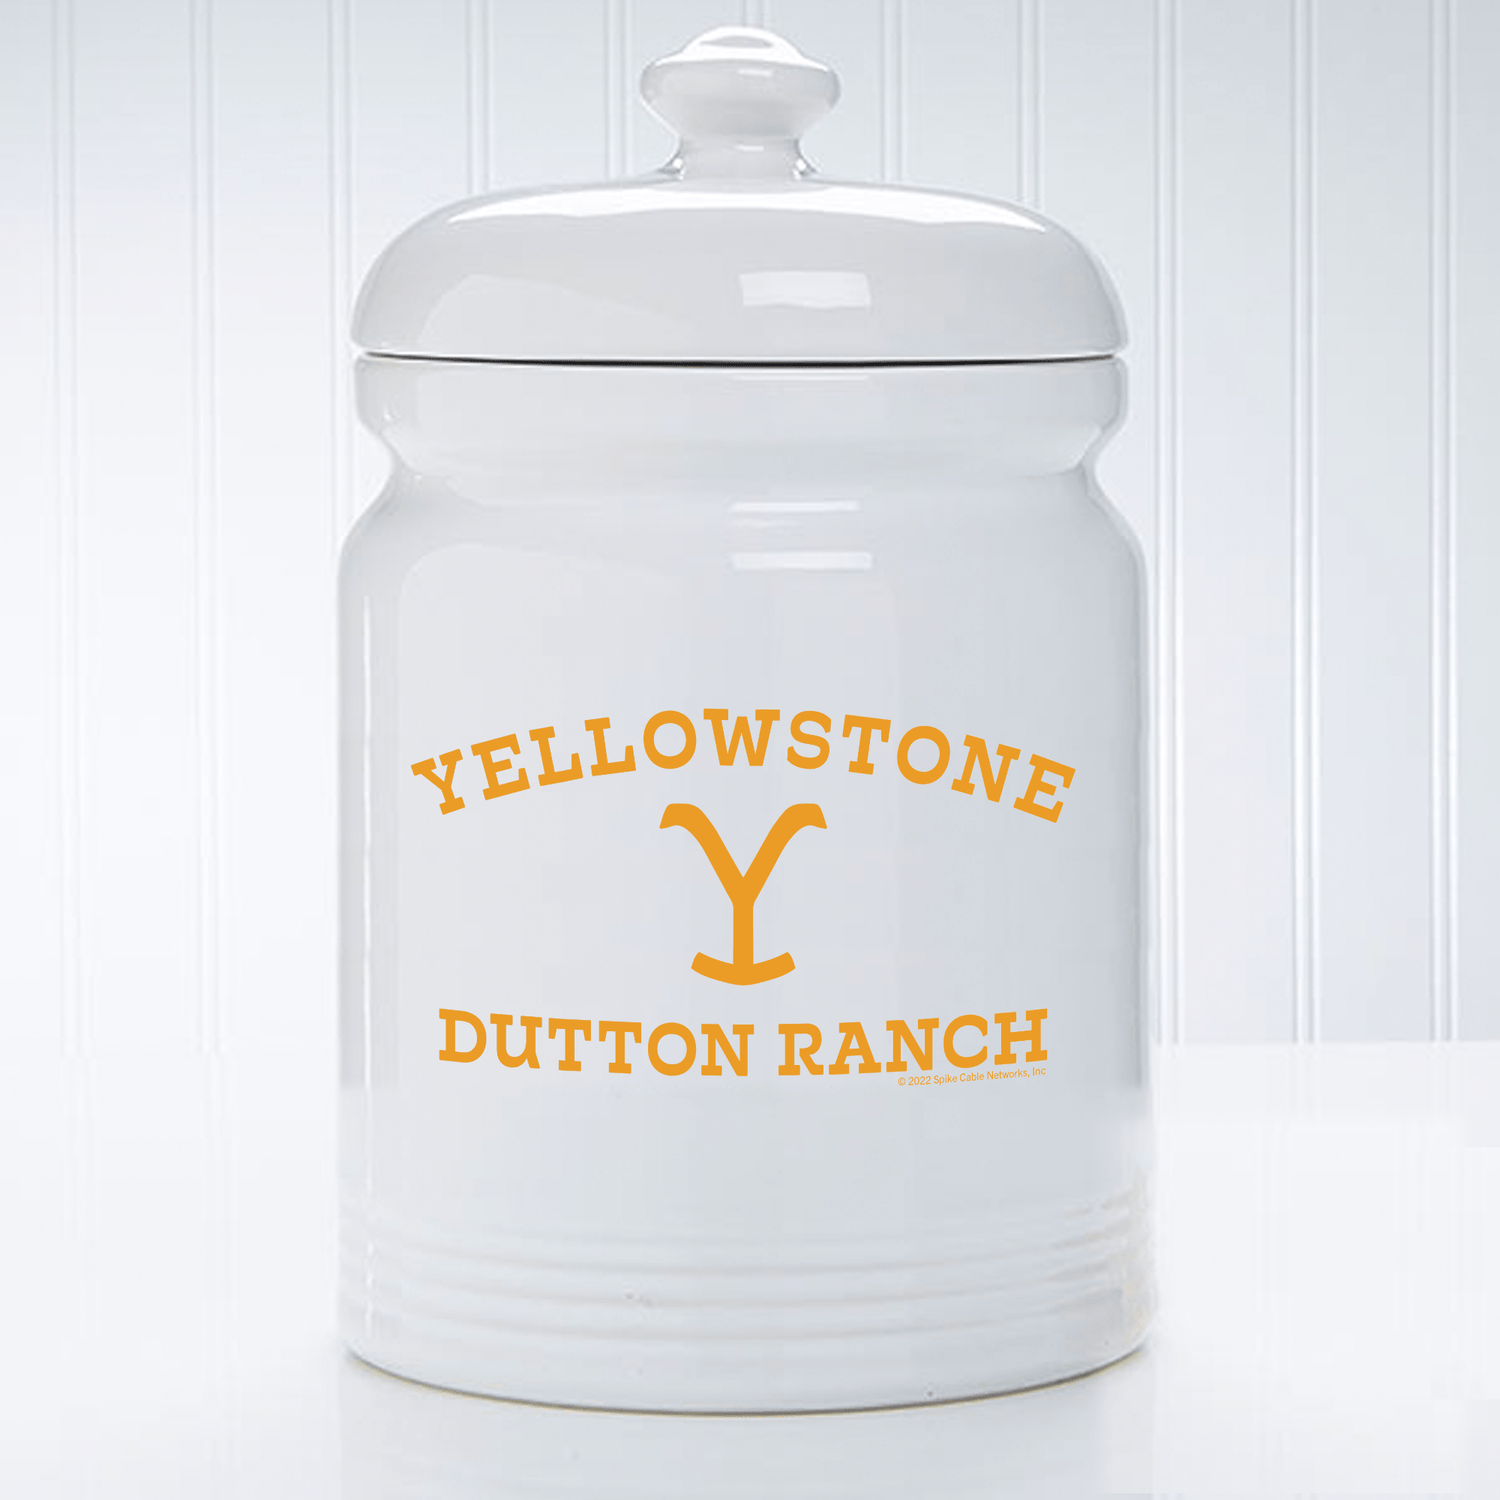 Yellowstone Dutton Ranch Logo Pet Treat Jar - Paramount Shop